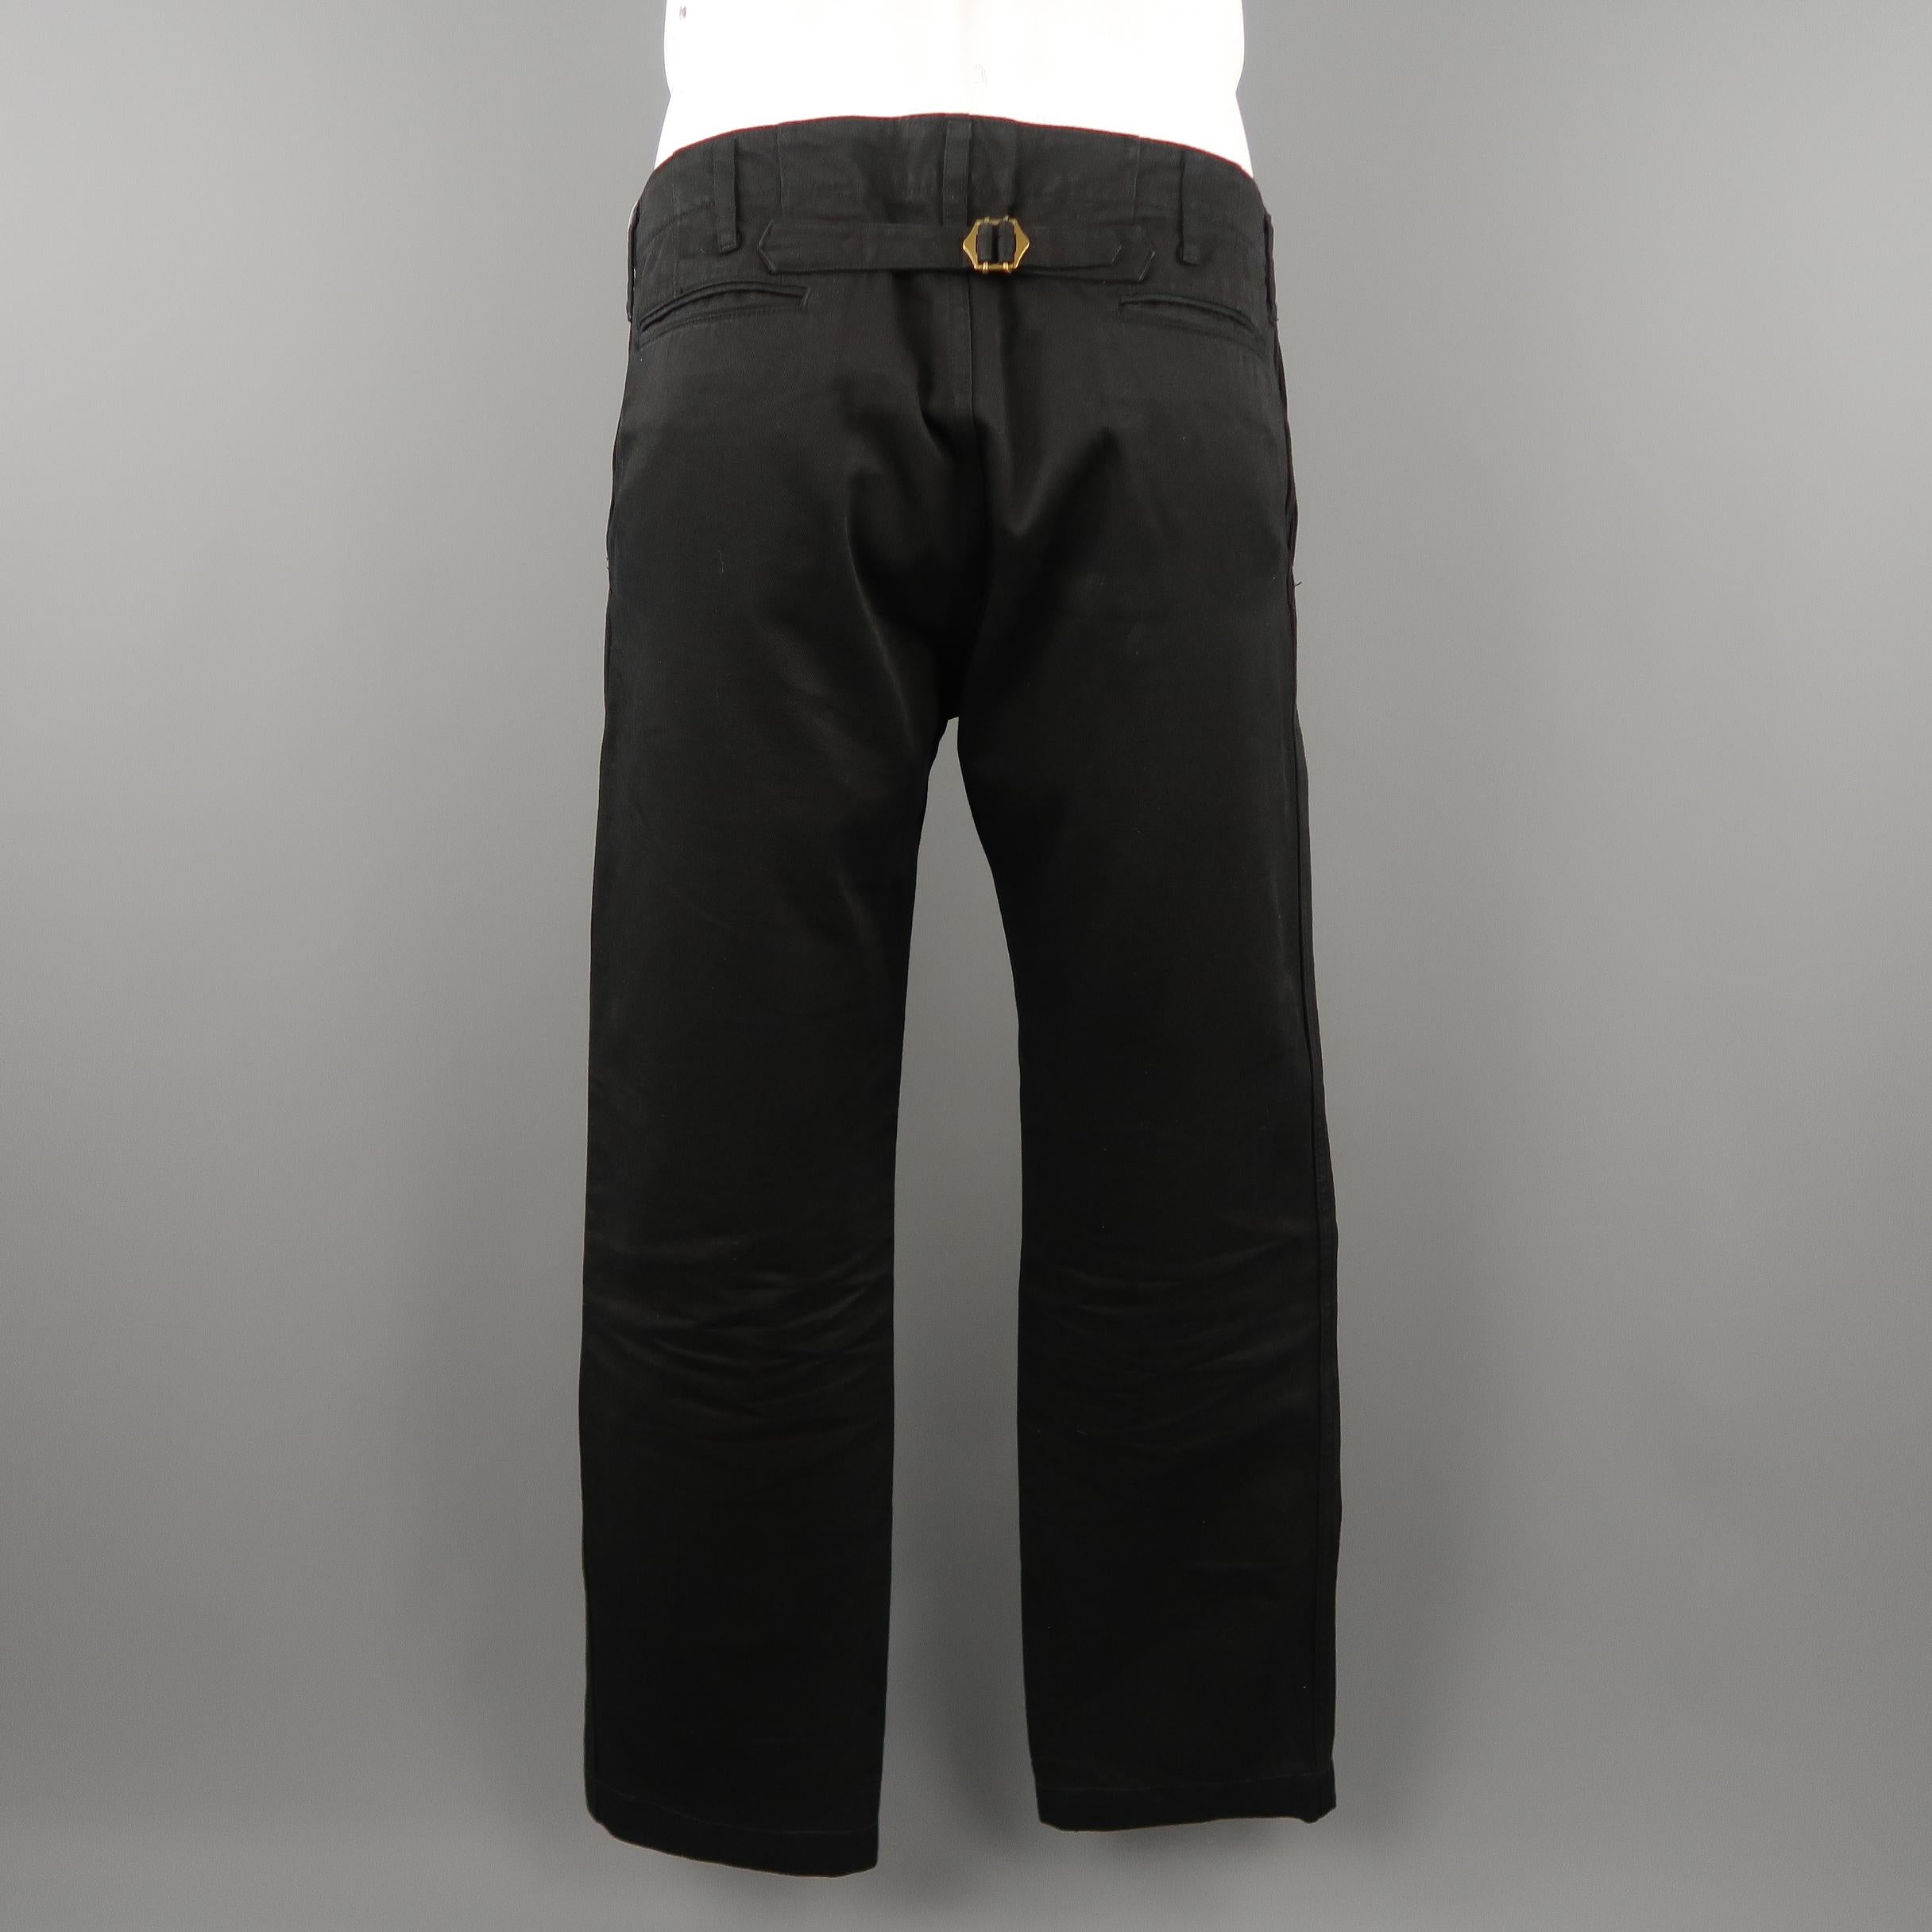 Women's or Men's VISVIM Size 36 Black Solid Cotton Slim Chino Casual Pants